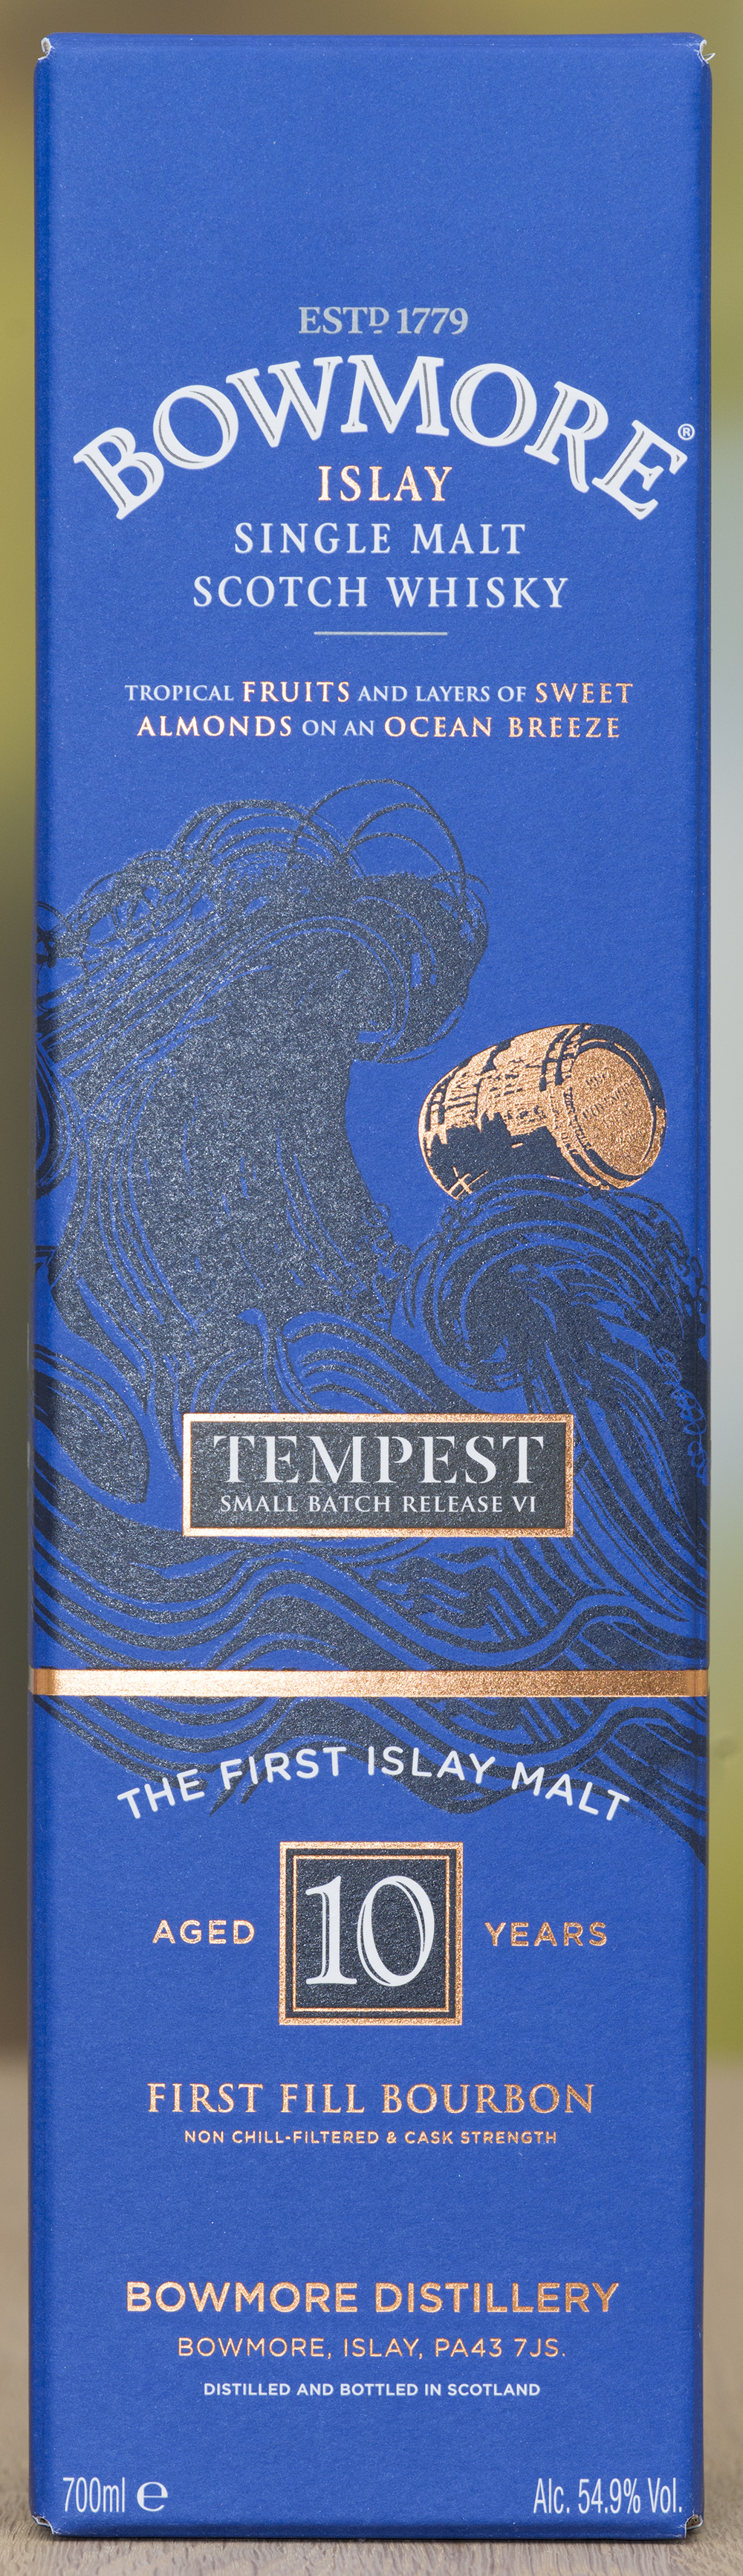 Billede: DSC_9869 - Tempest batch 6 - box front.jpg